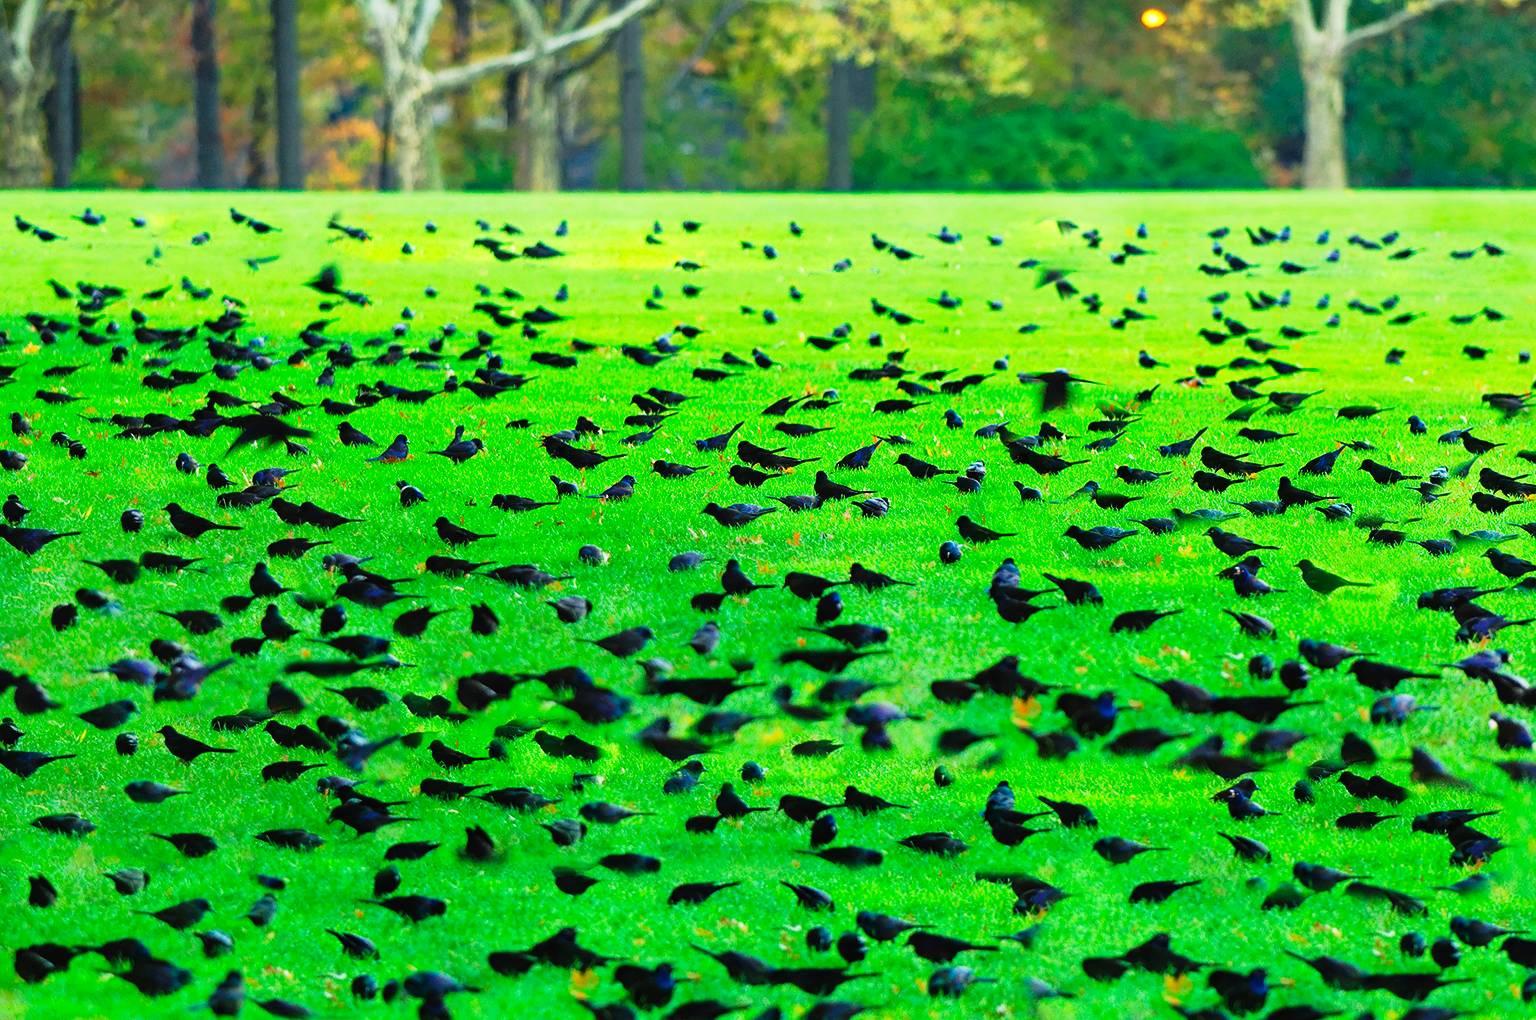 Mitchell Funk Landscape Photograph - Field of Birds